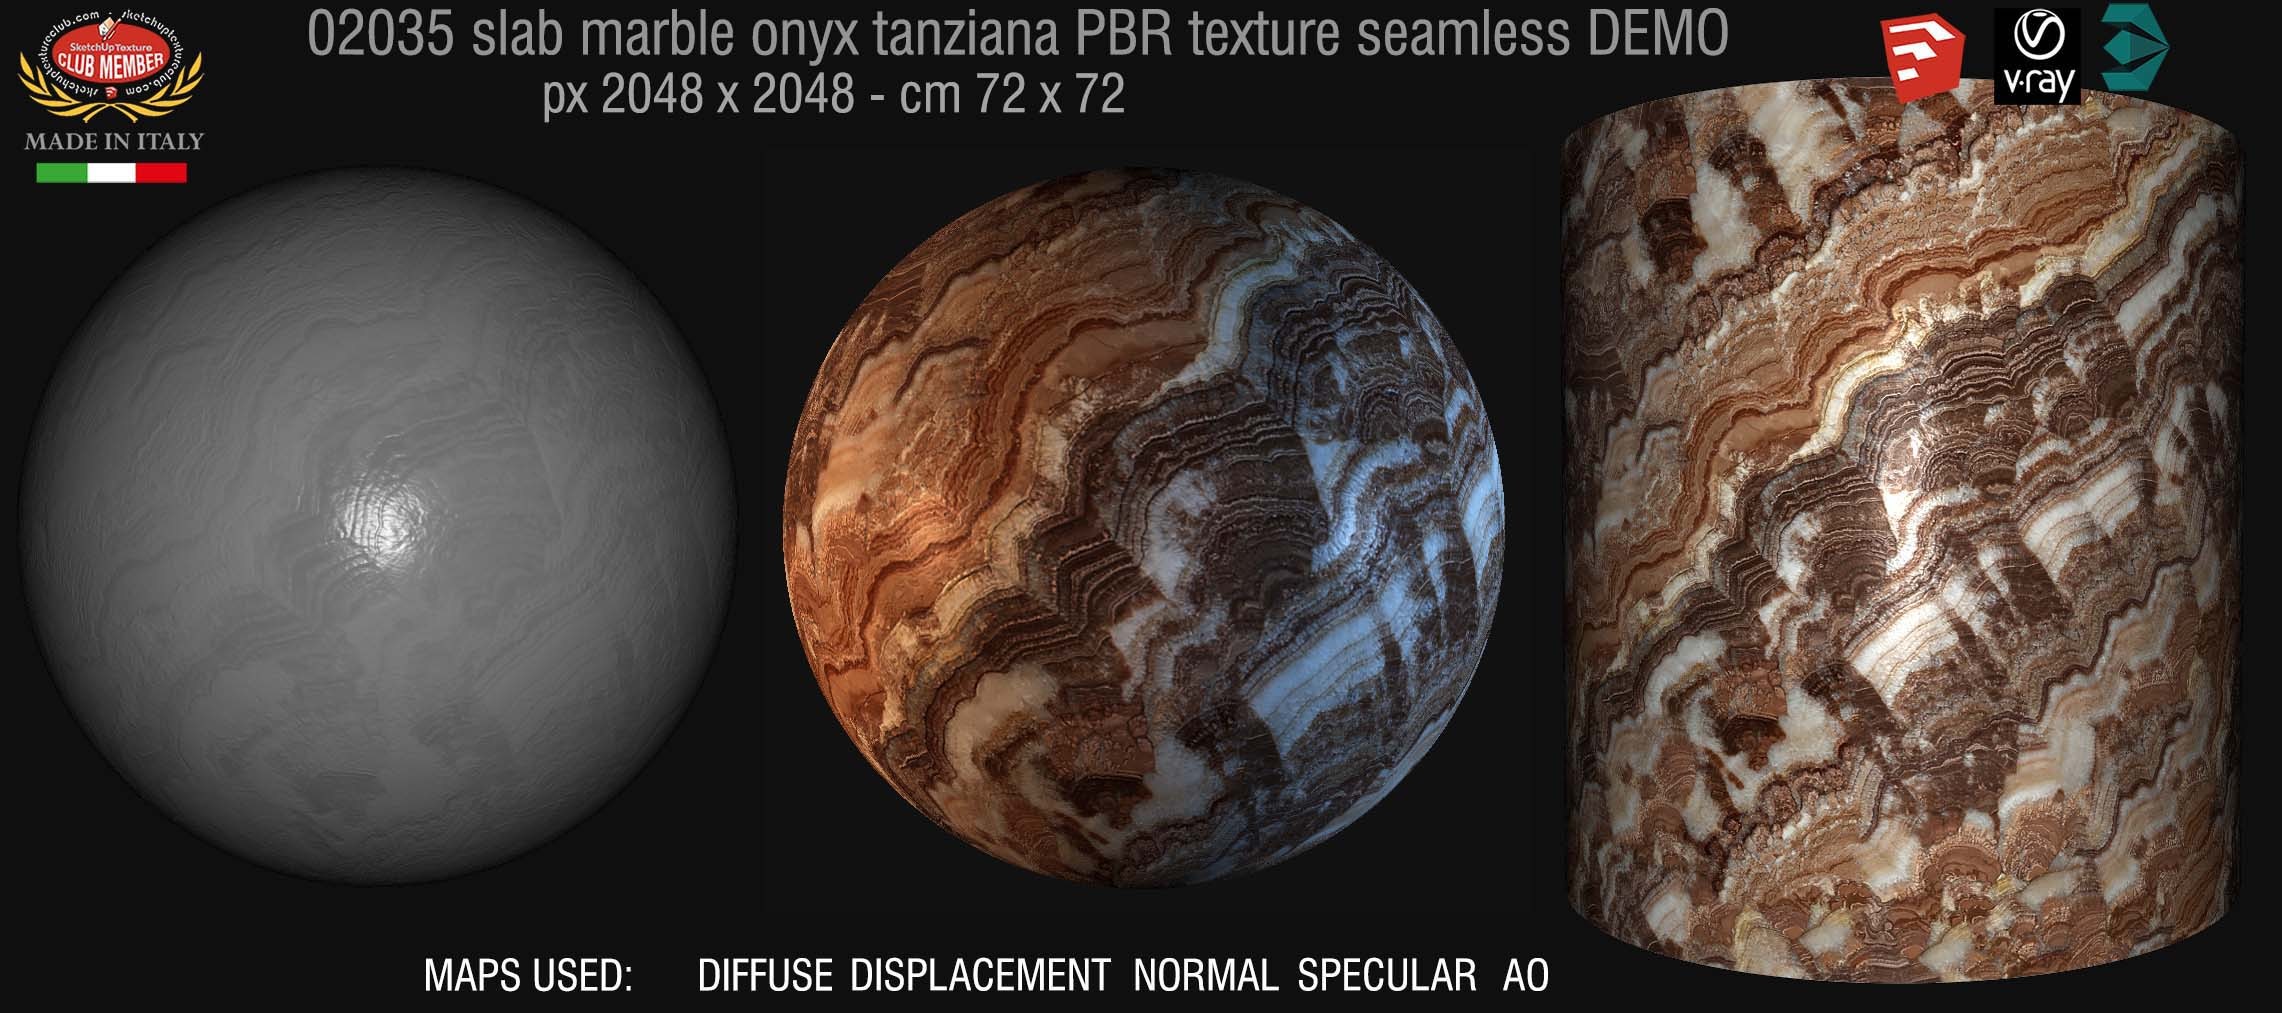 02035 slab marble onyx tanziana PBR texture seamless DEMO